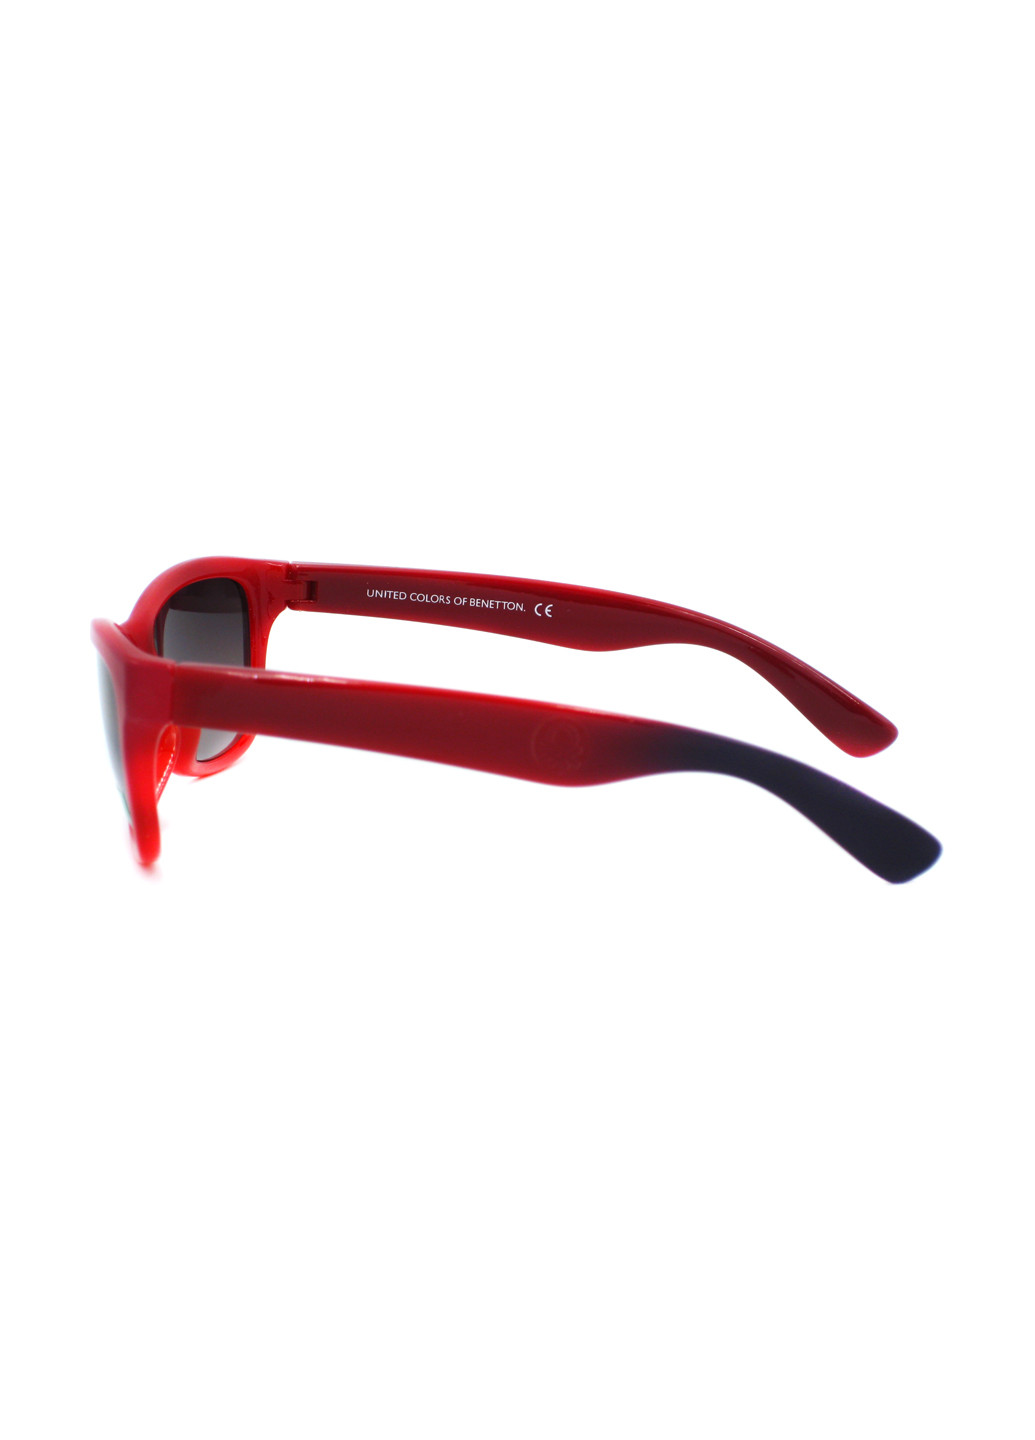 Cолнцезащитные очки United Colors of Benetton bb504 r2 (188521663)